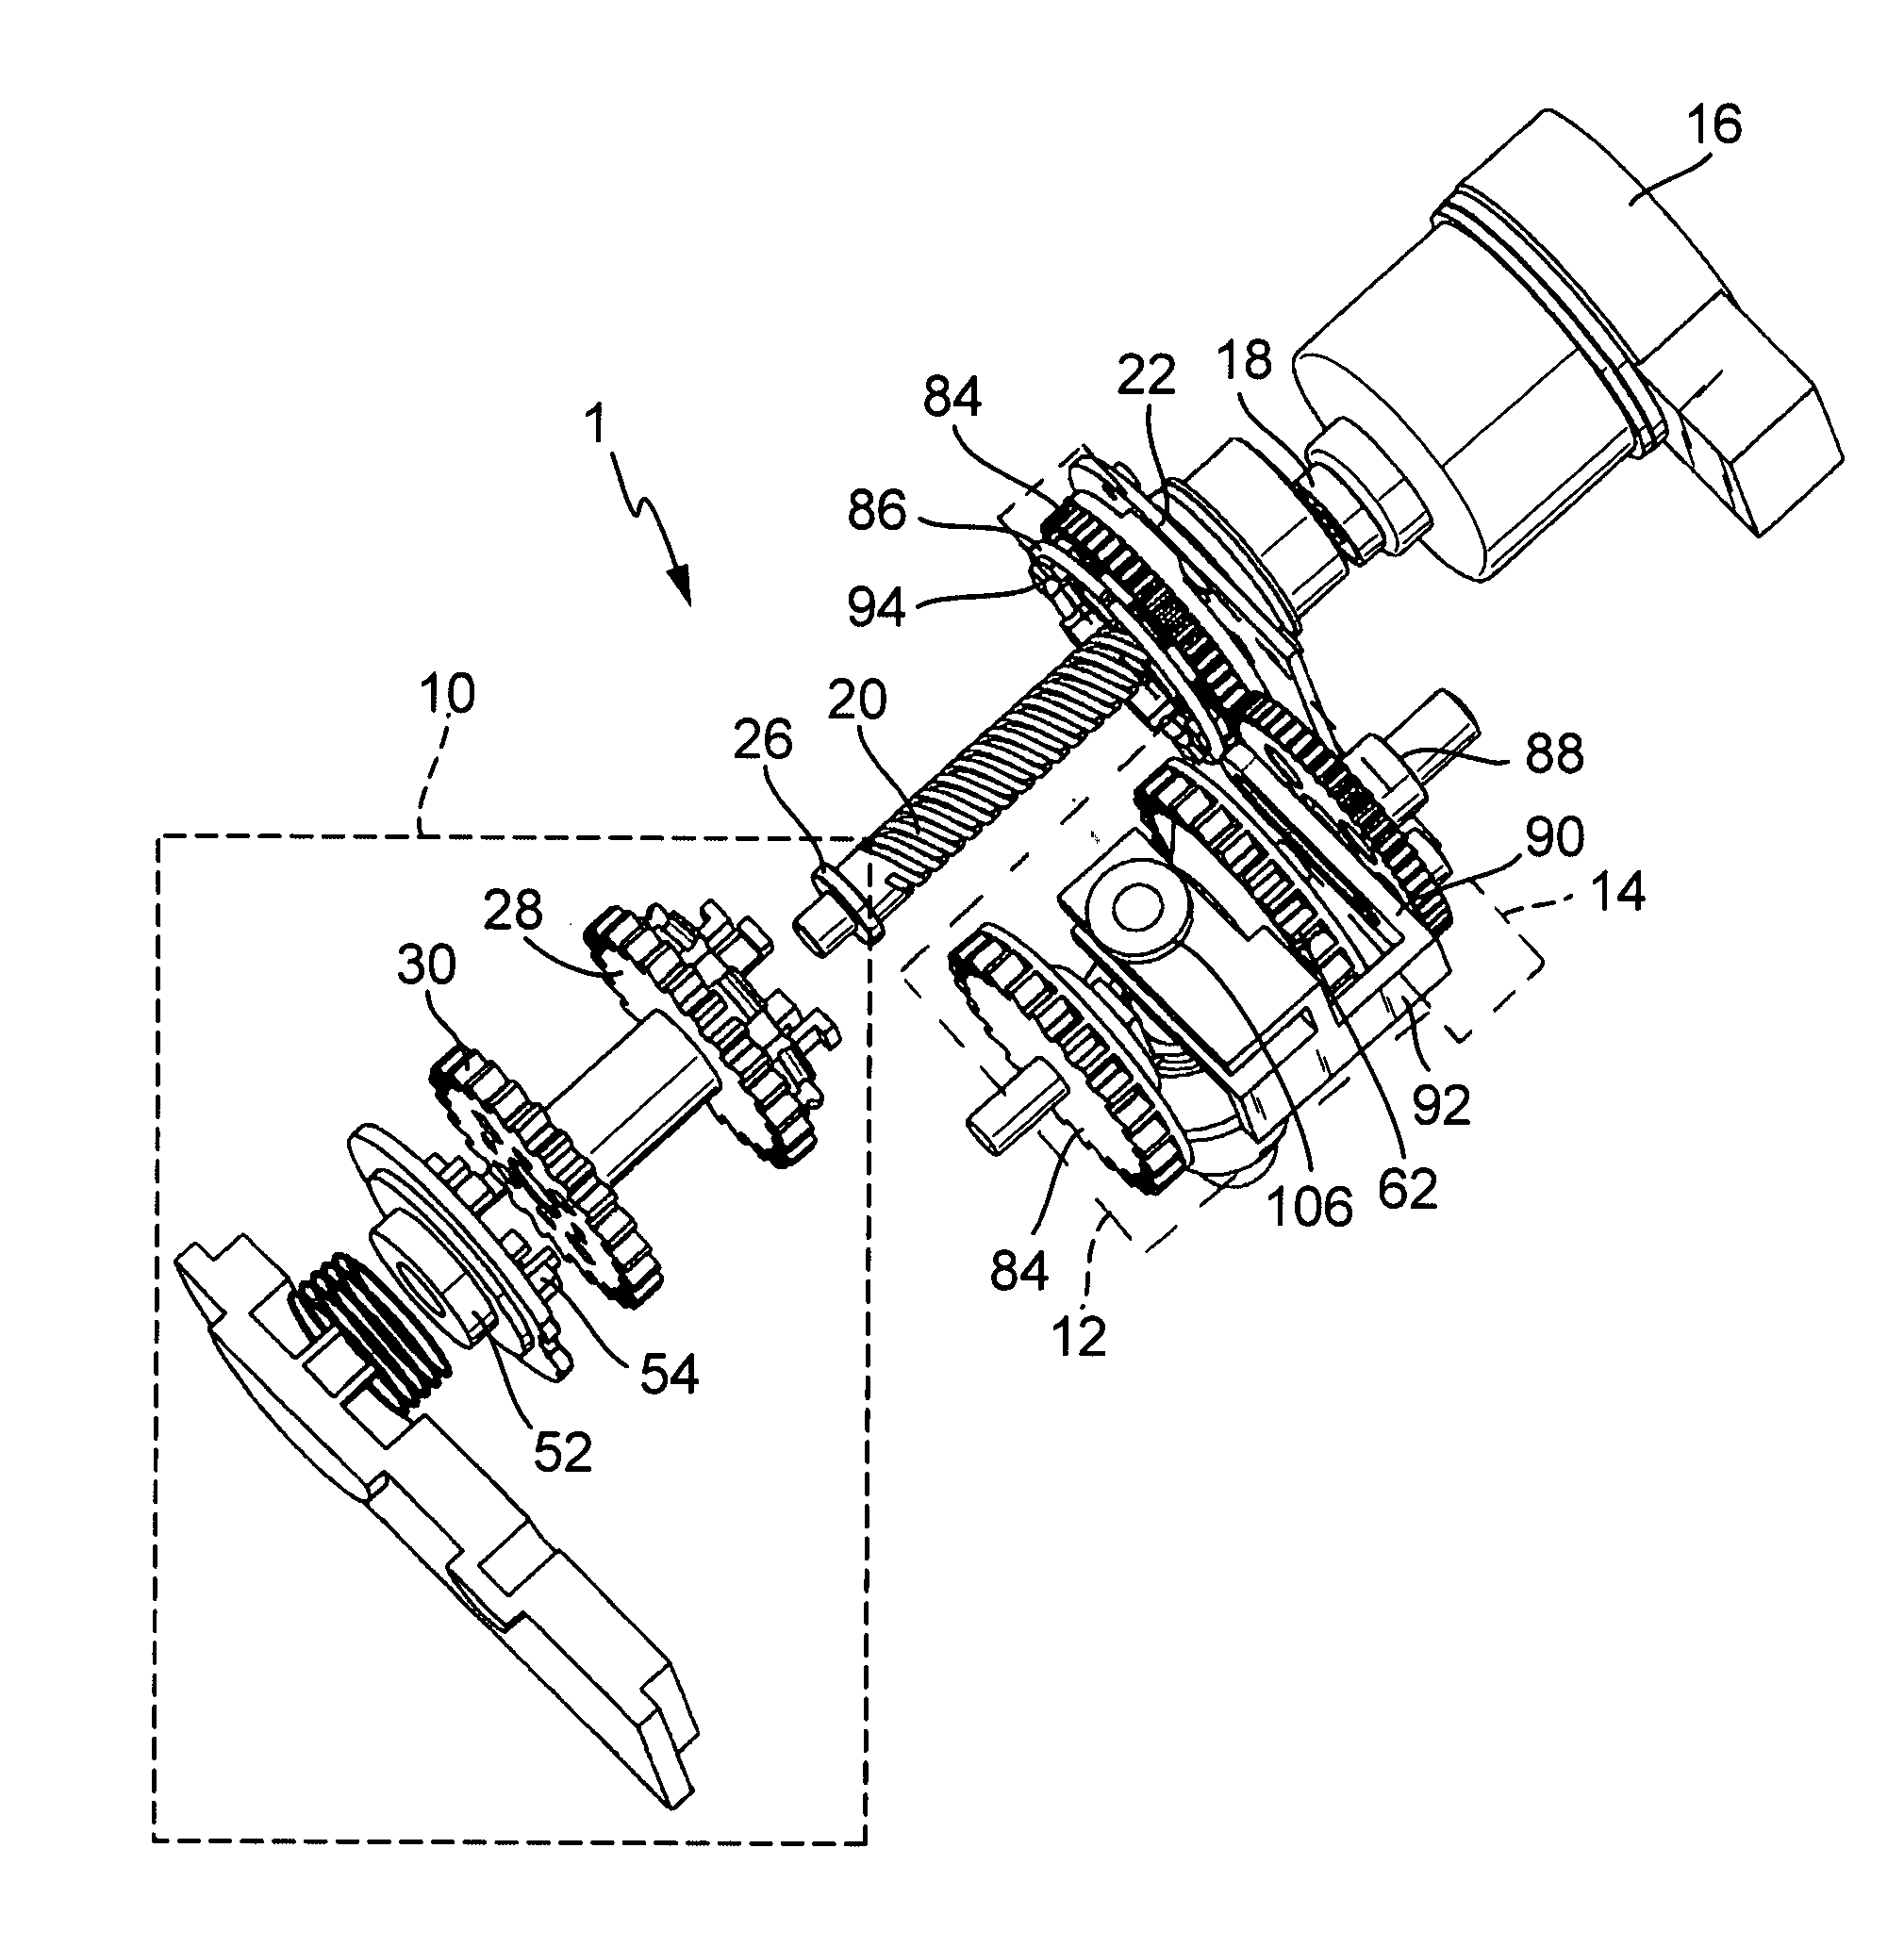 Single motor transmission shifting mechanism for a motor vehicle transmission